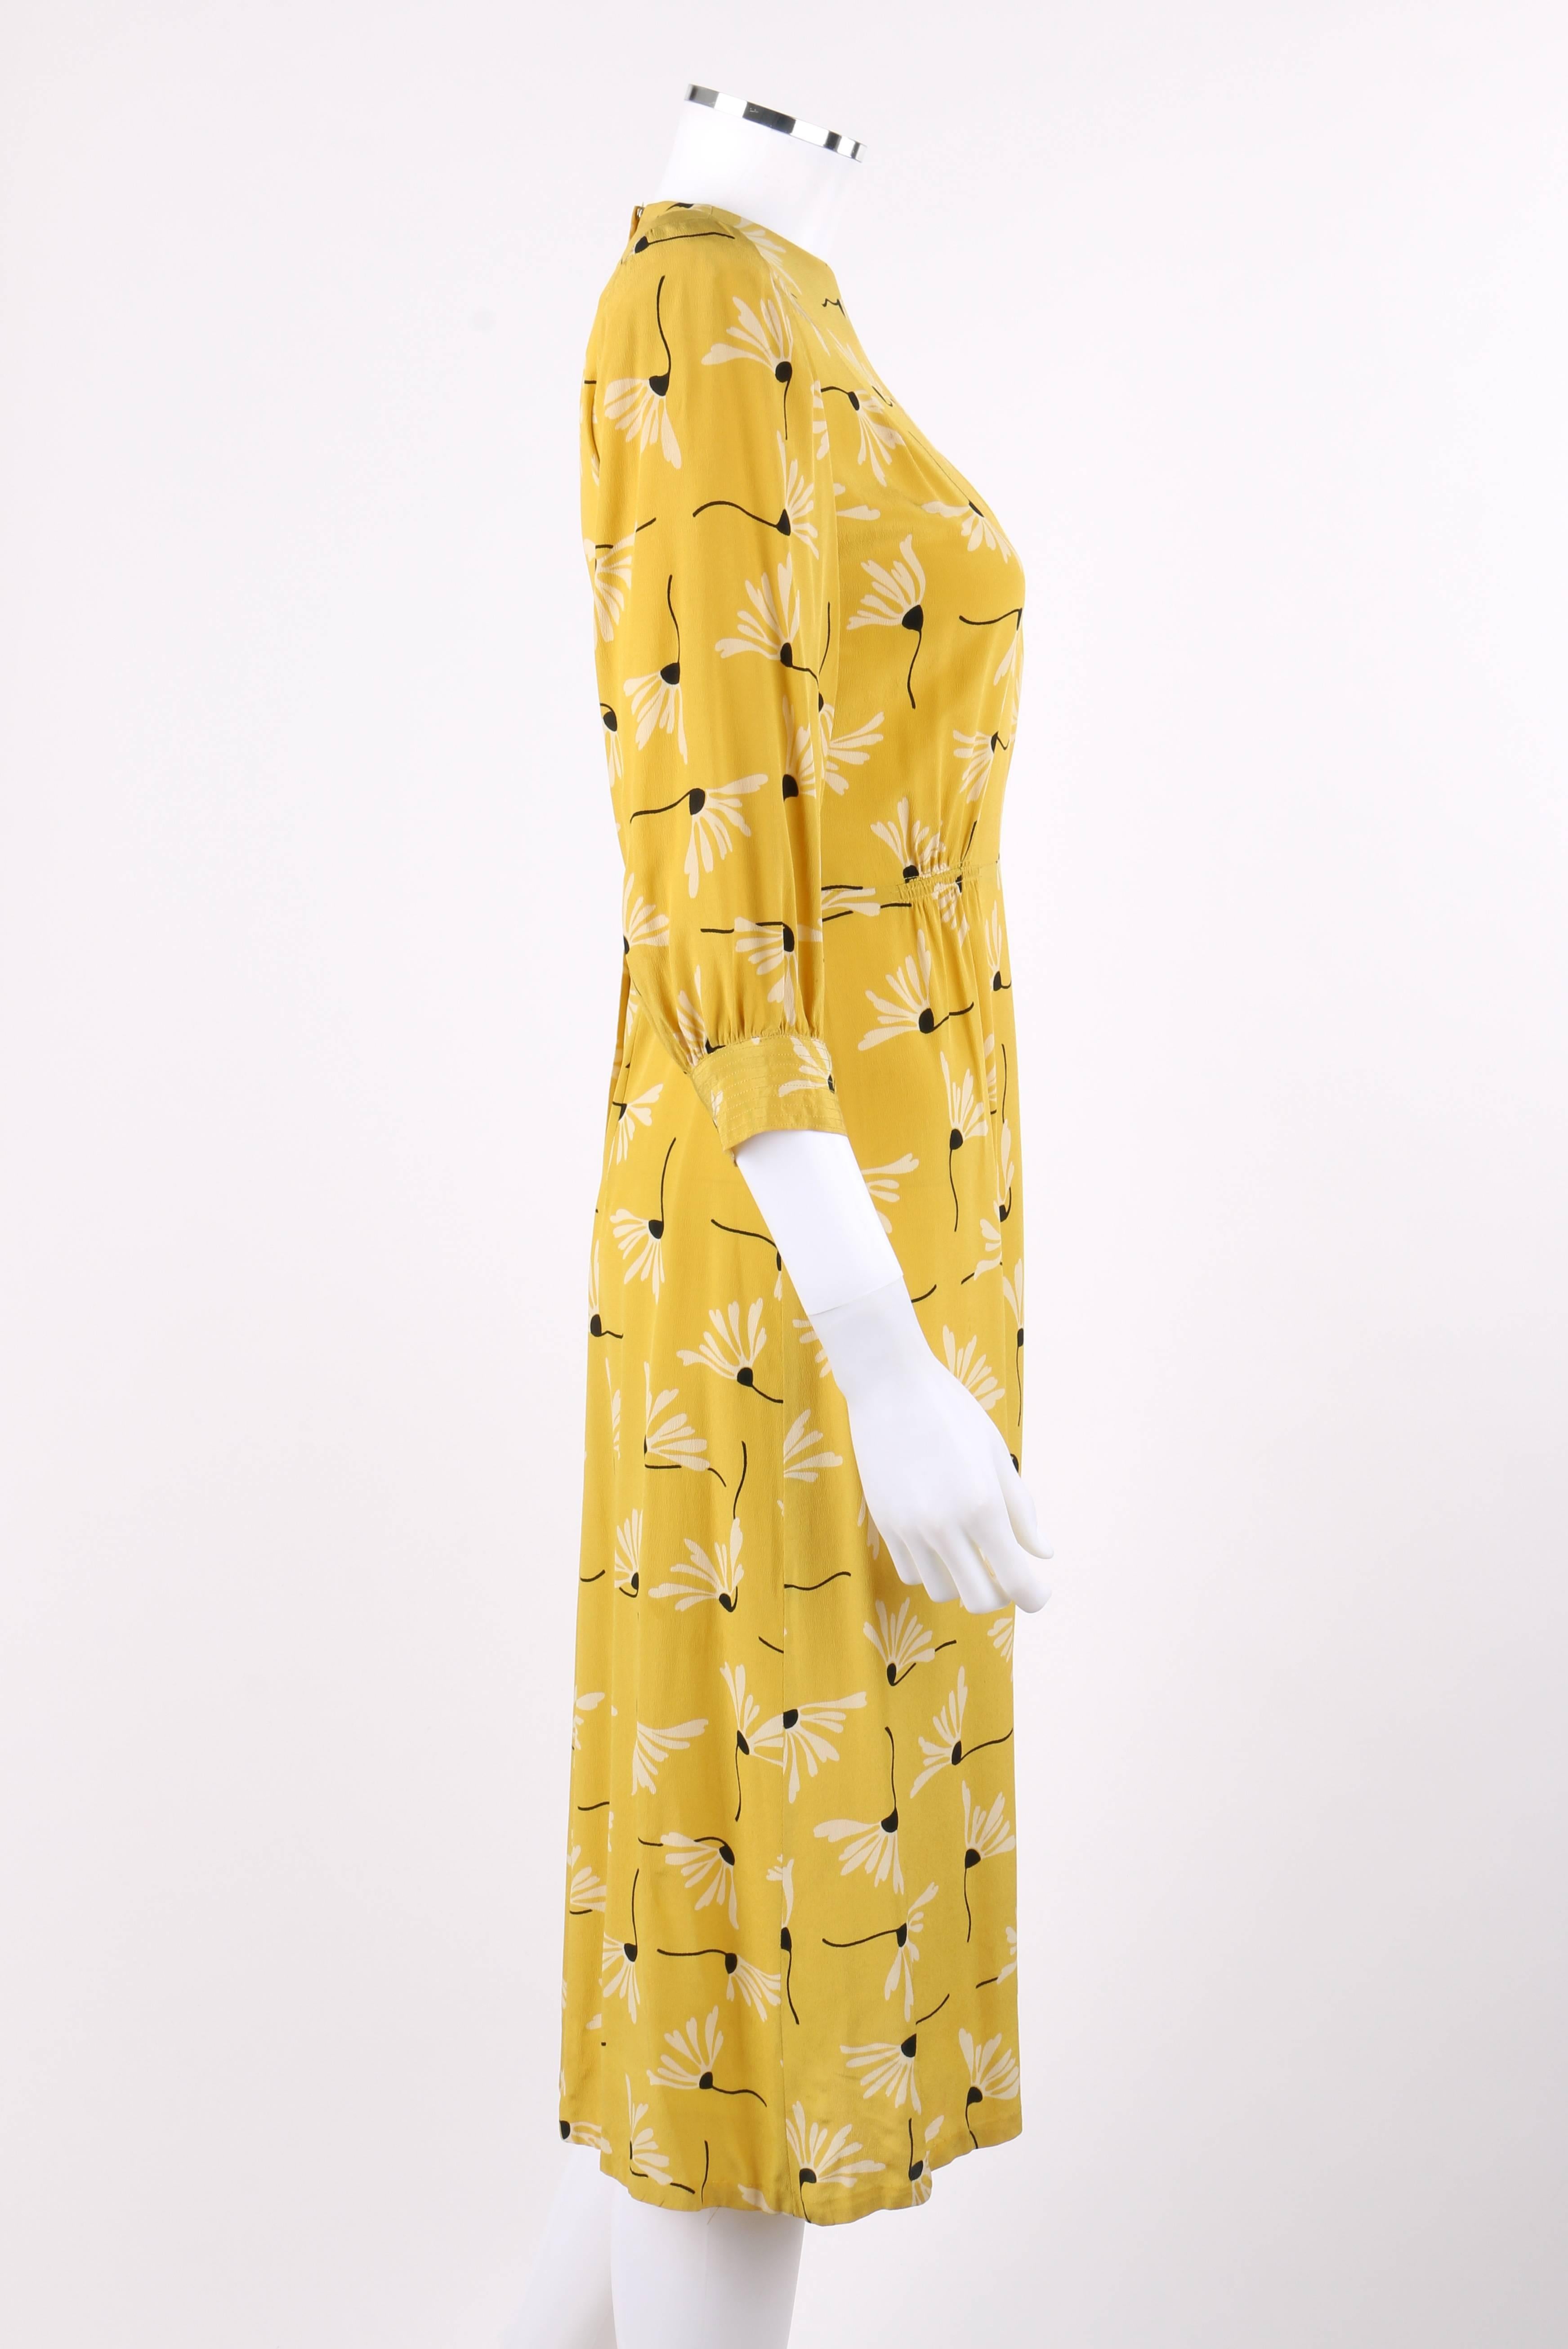 1940s yellow dress